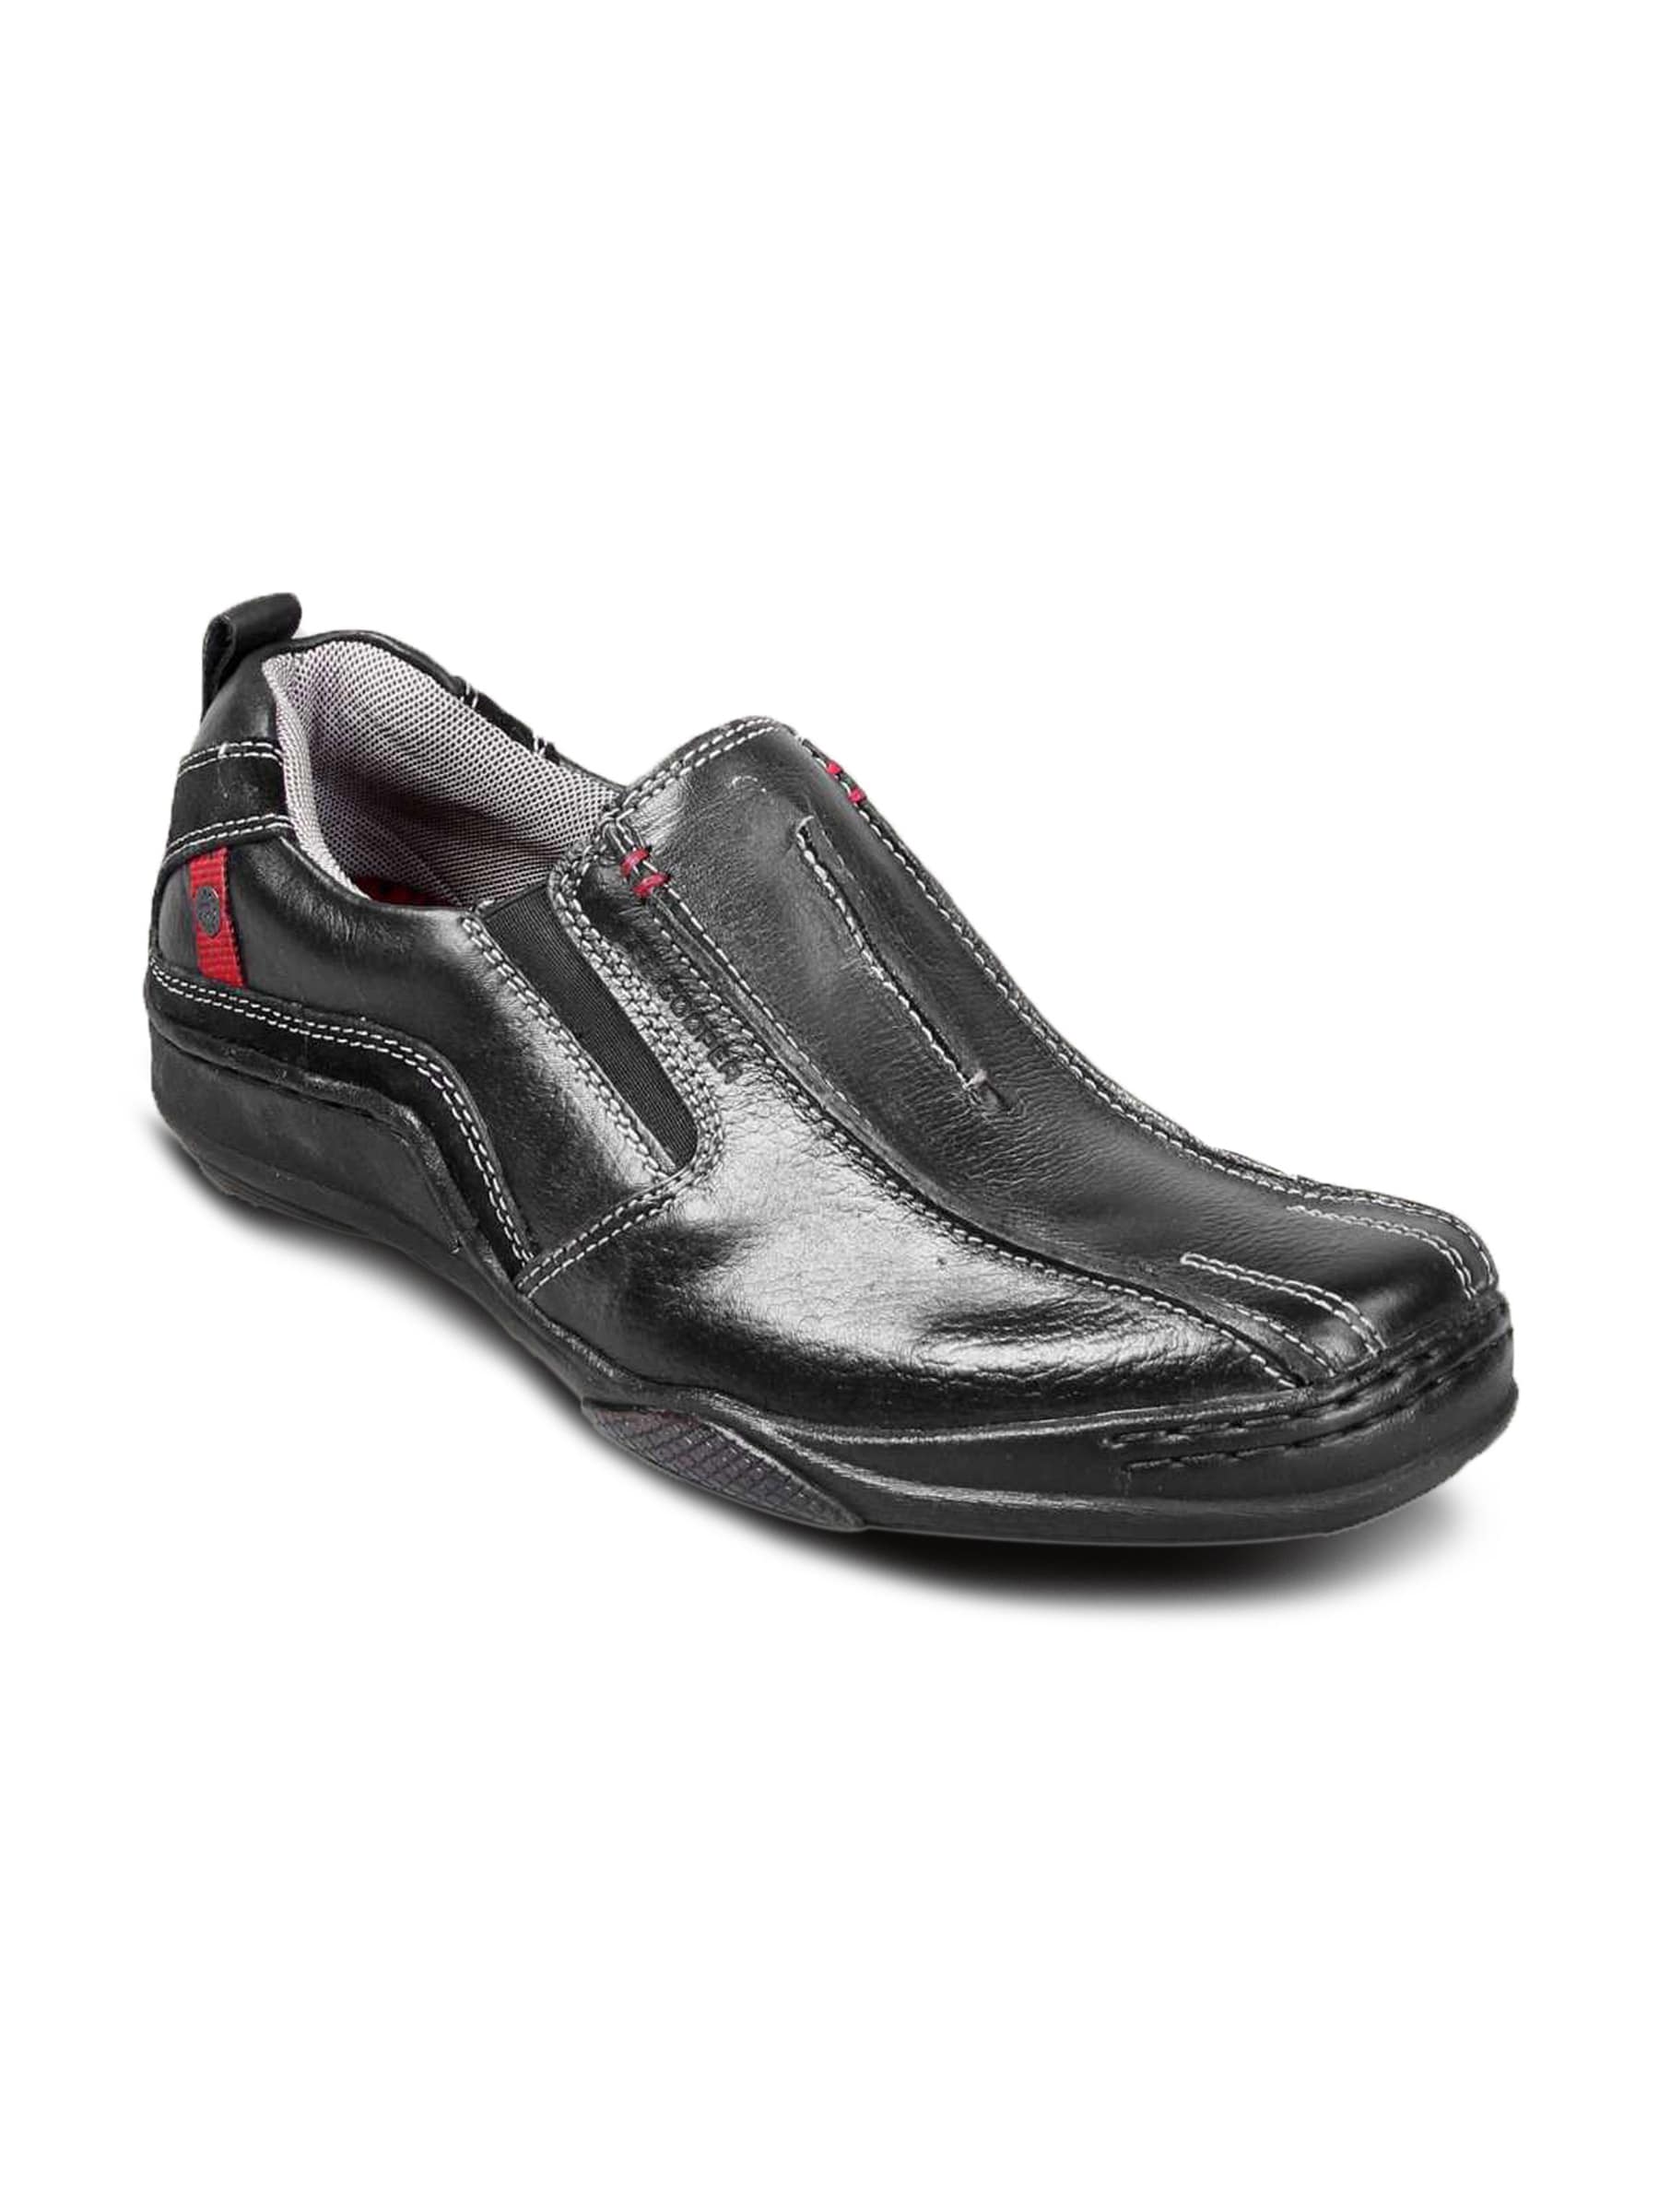 Lee Cooper Men's Casual Leather Black Shoe